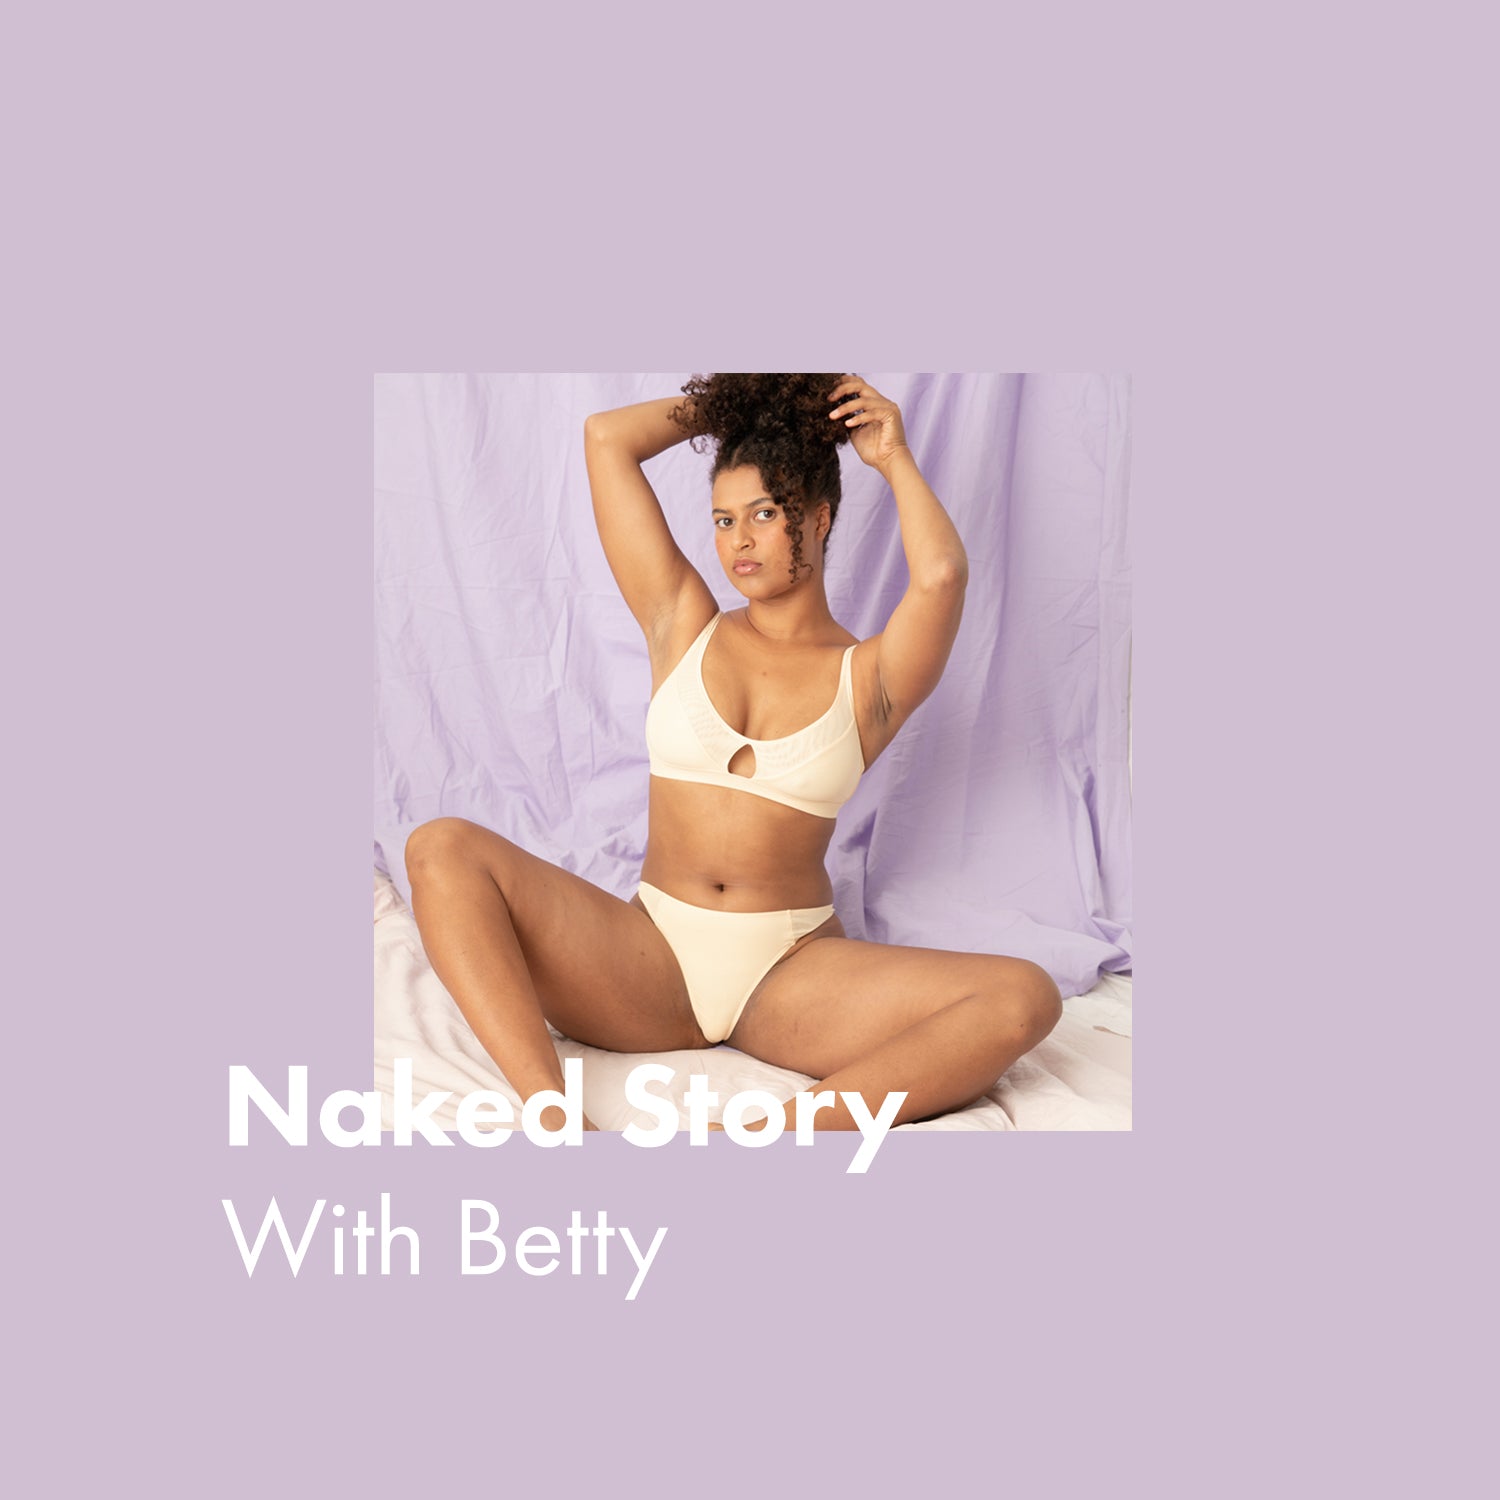 Betty’s Naked Story